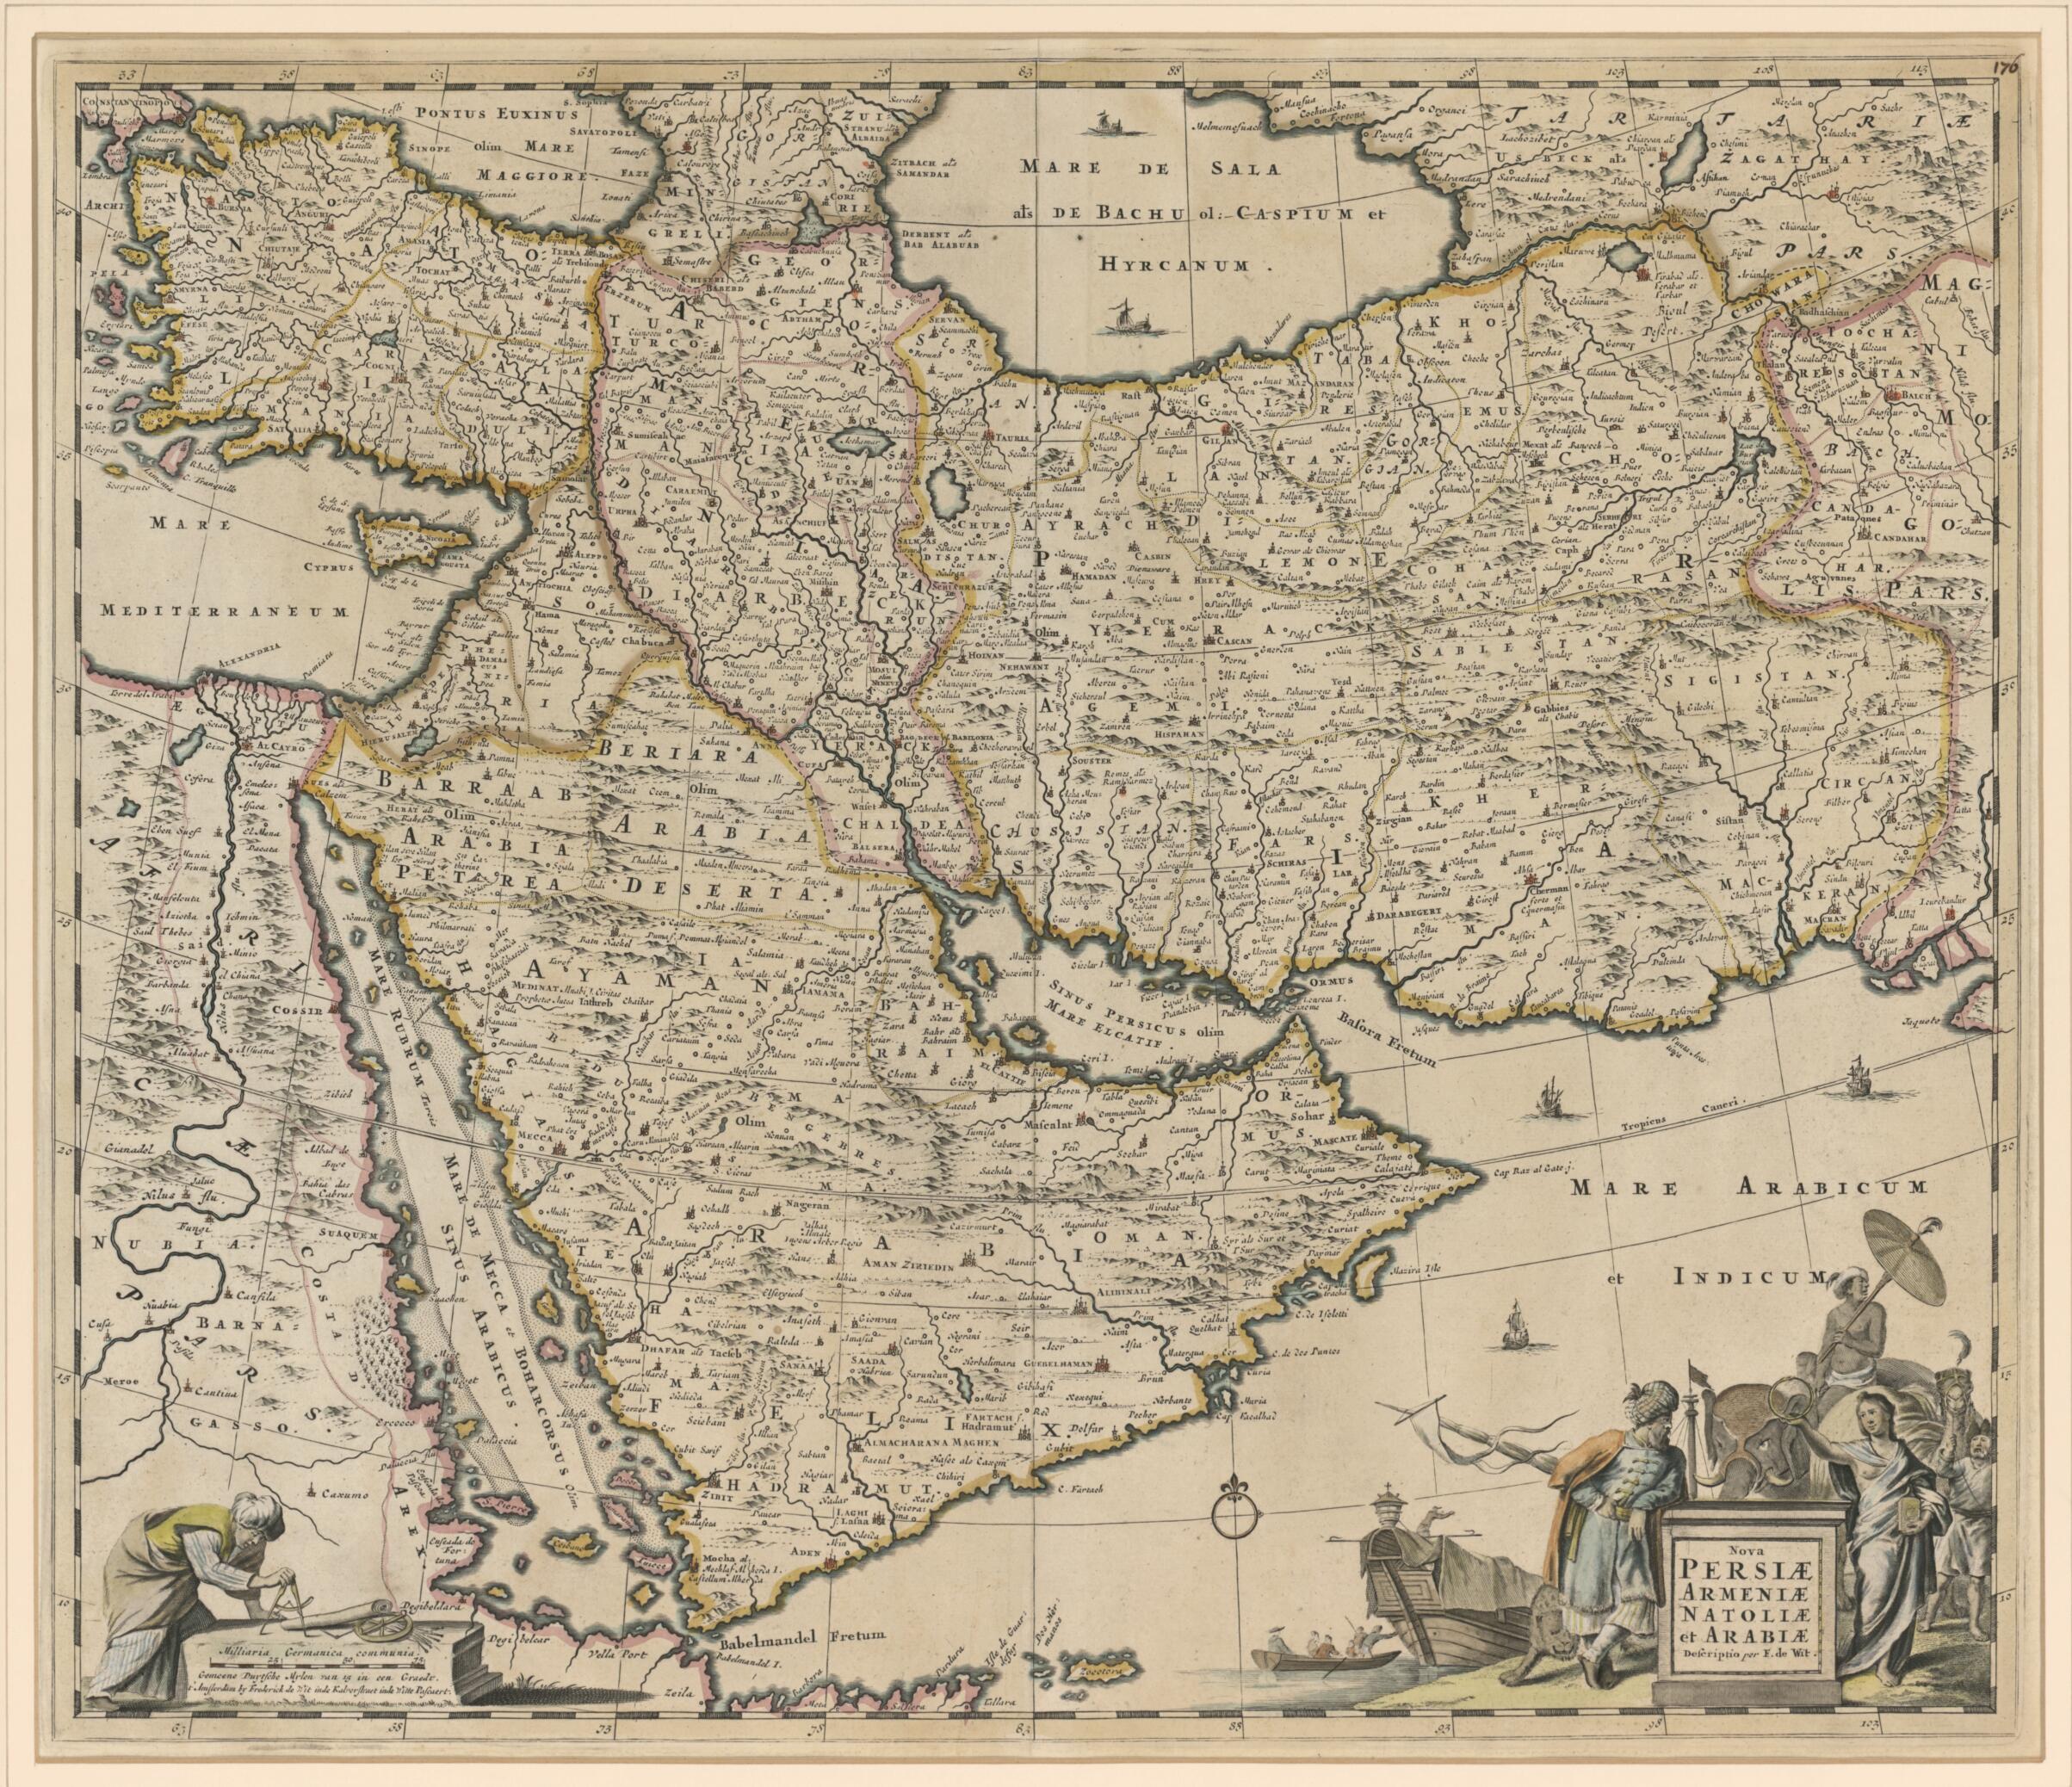 This old map of New Persia, Armenia, Anatolia and Arabia. (Nova Persiæ, Armeniæ, Natoliæ, Et Arabiæ) from 1666 was created by Nicolas Sanson, Frederik De Wit in 1666